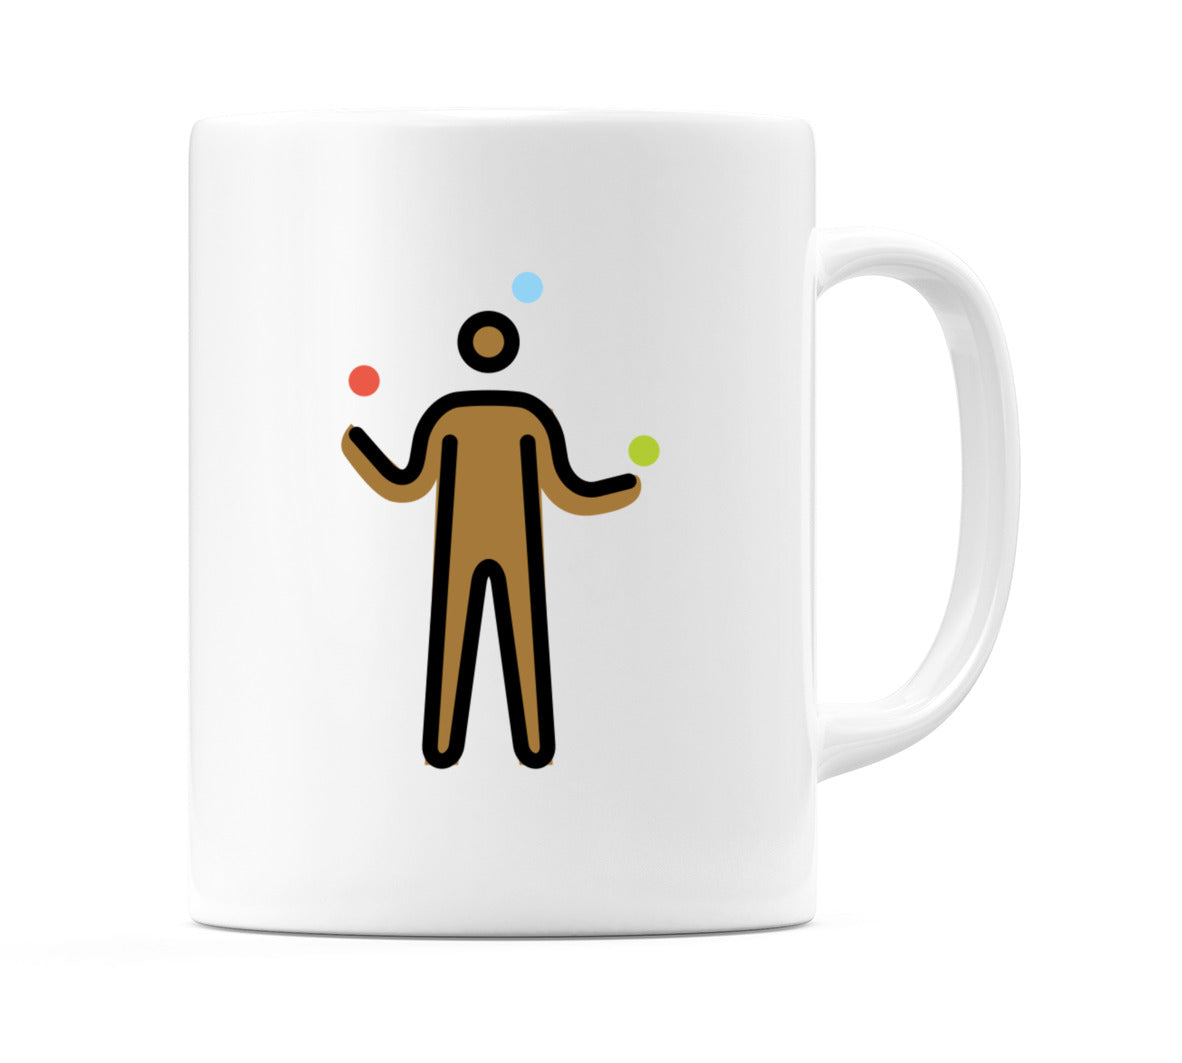 Person Juggling: Medium-Dark Skin Tone Emoji Mug